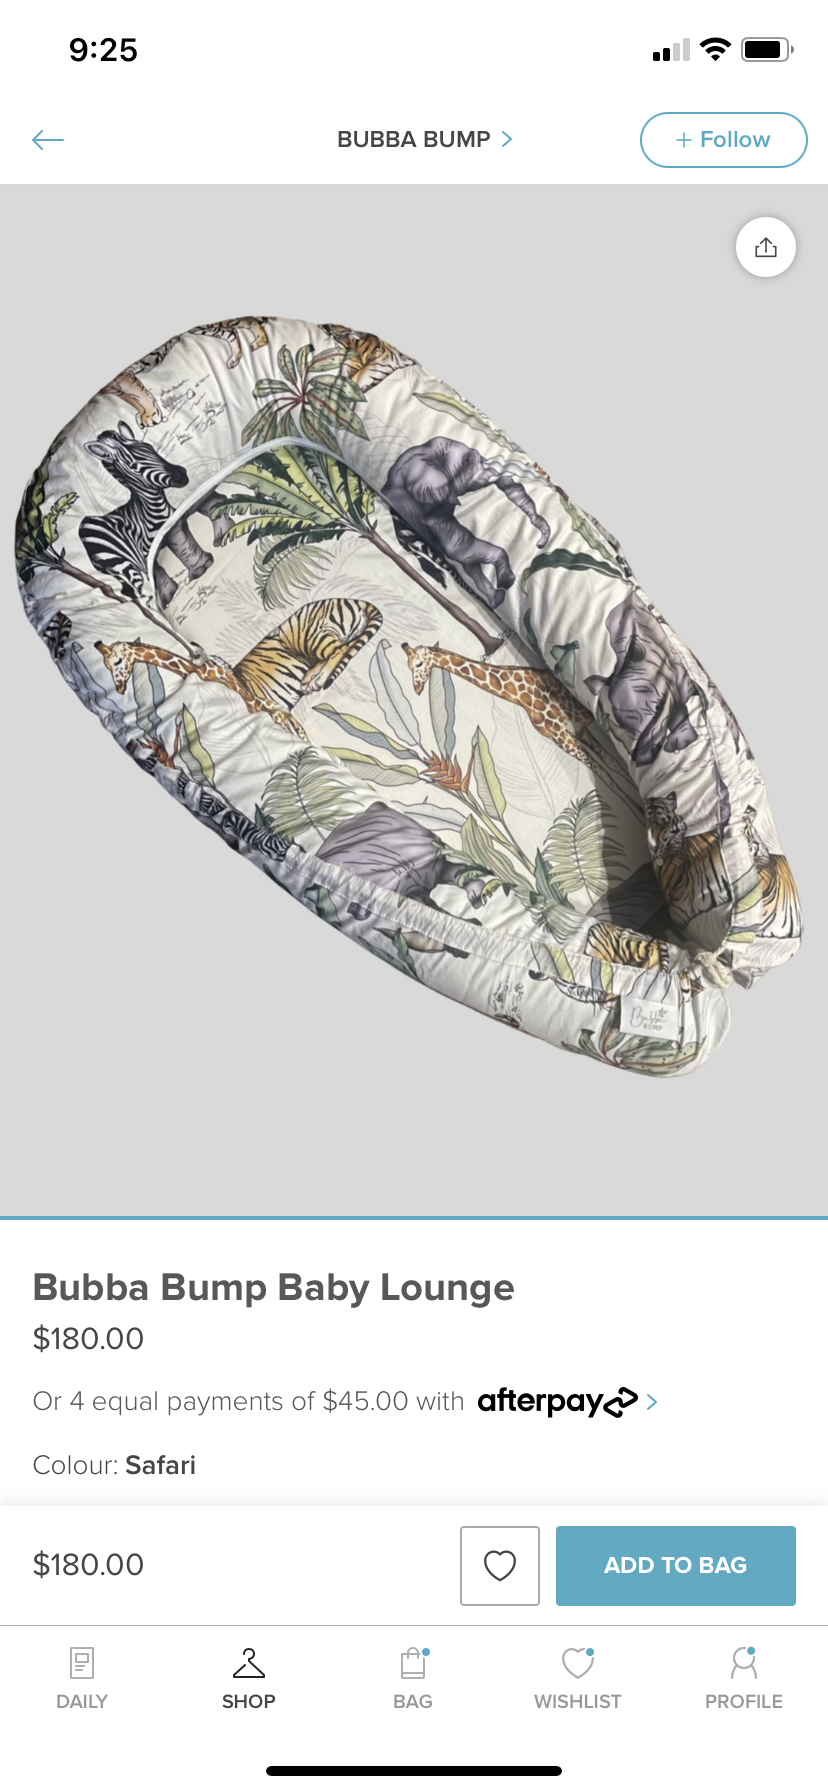 Bubba bump baby lounge